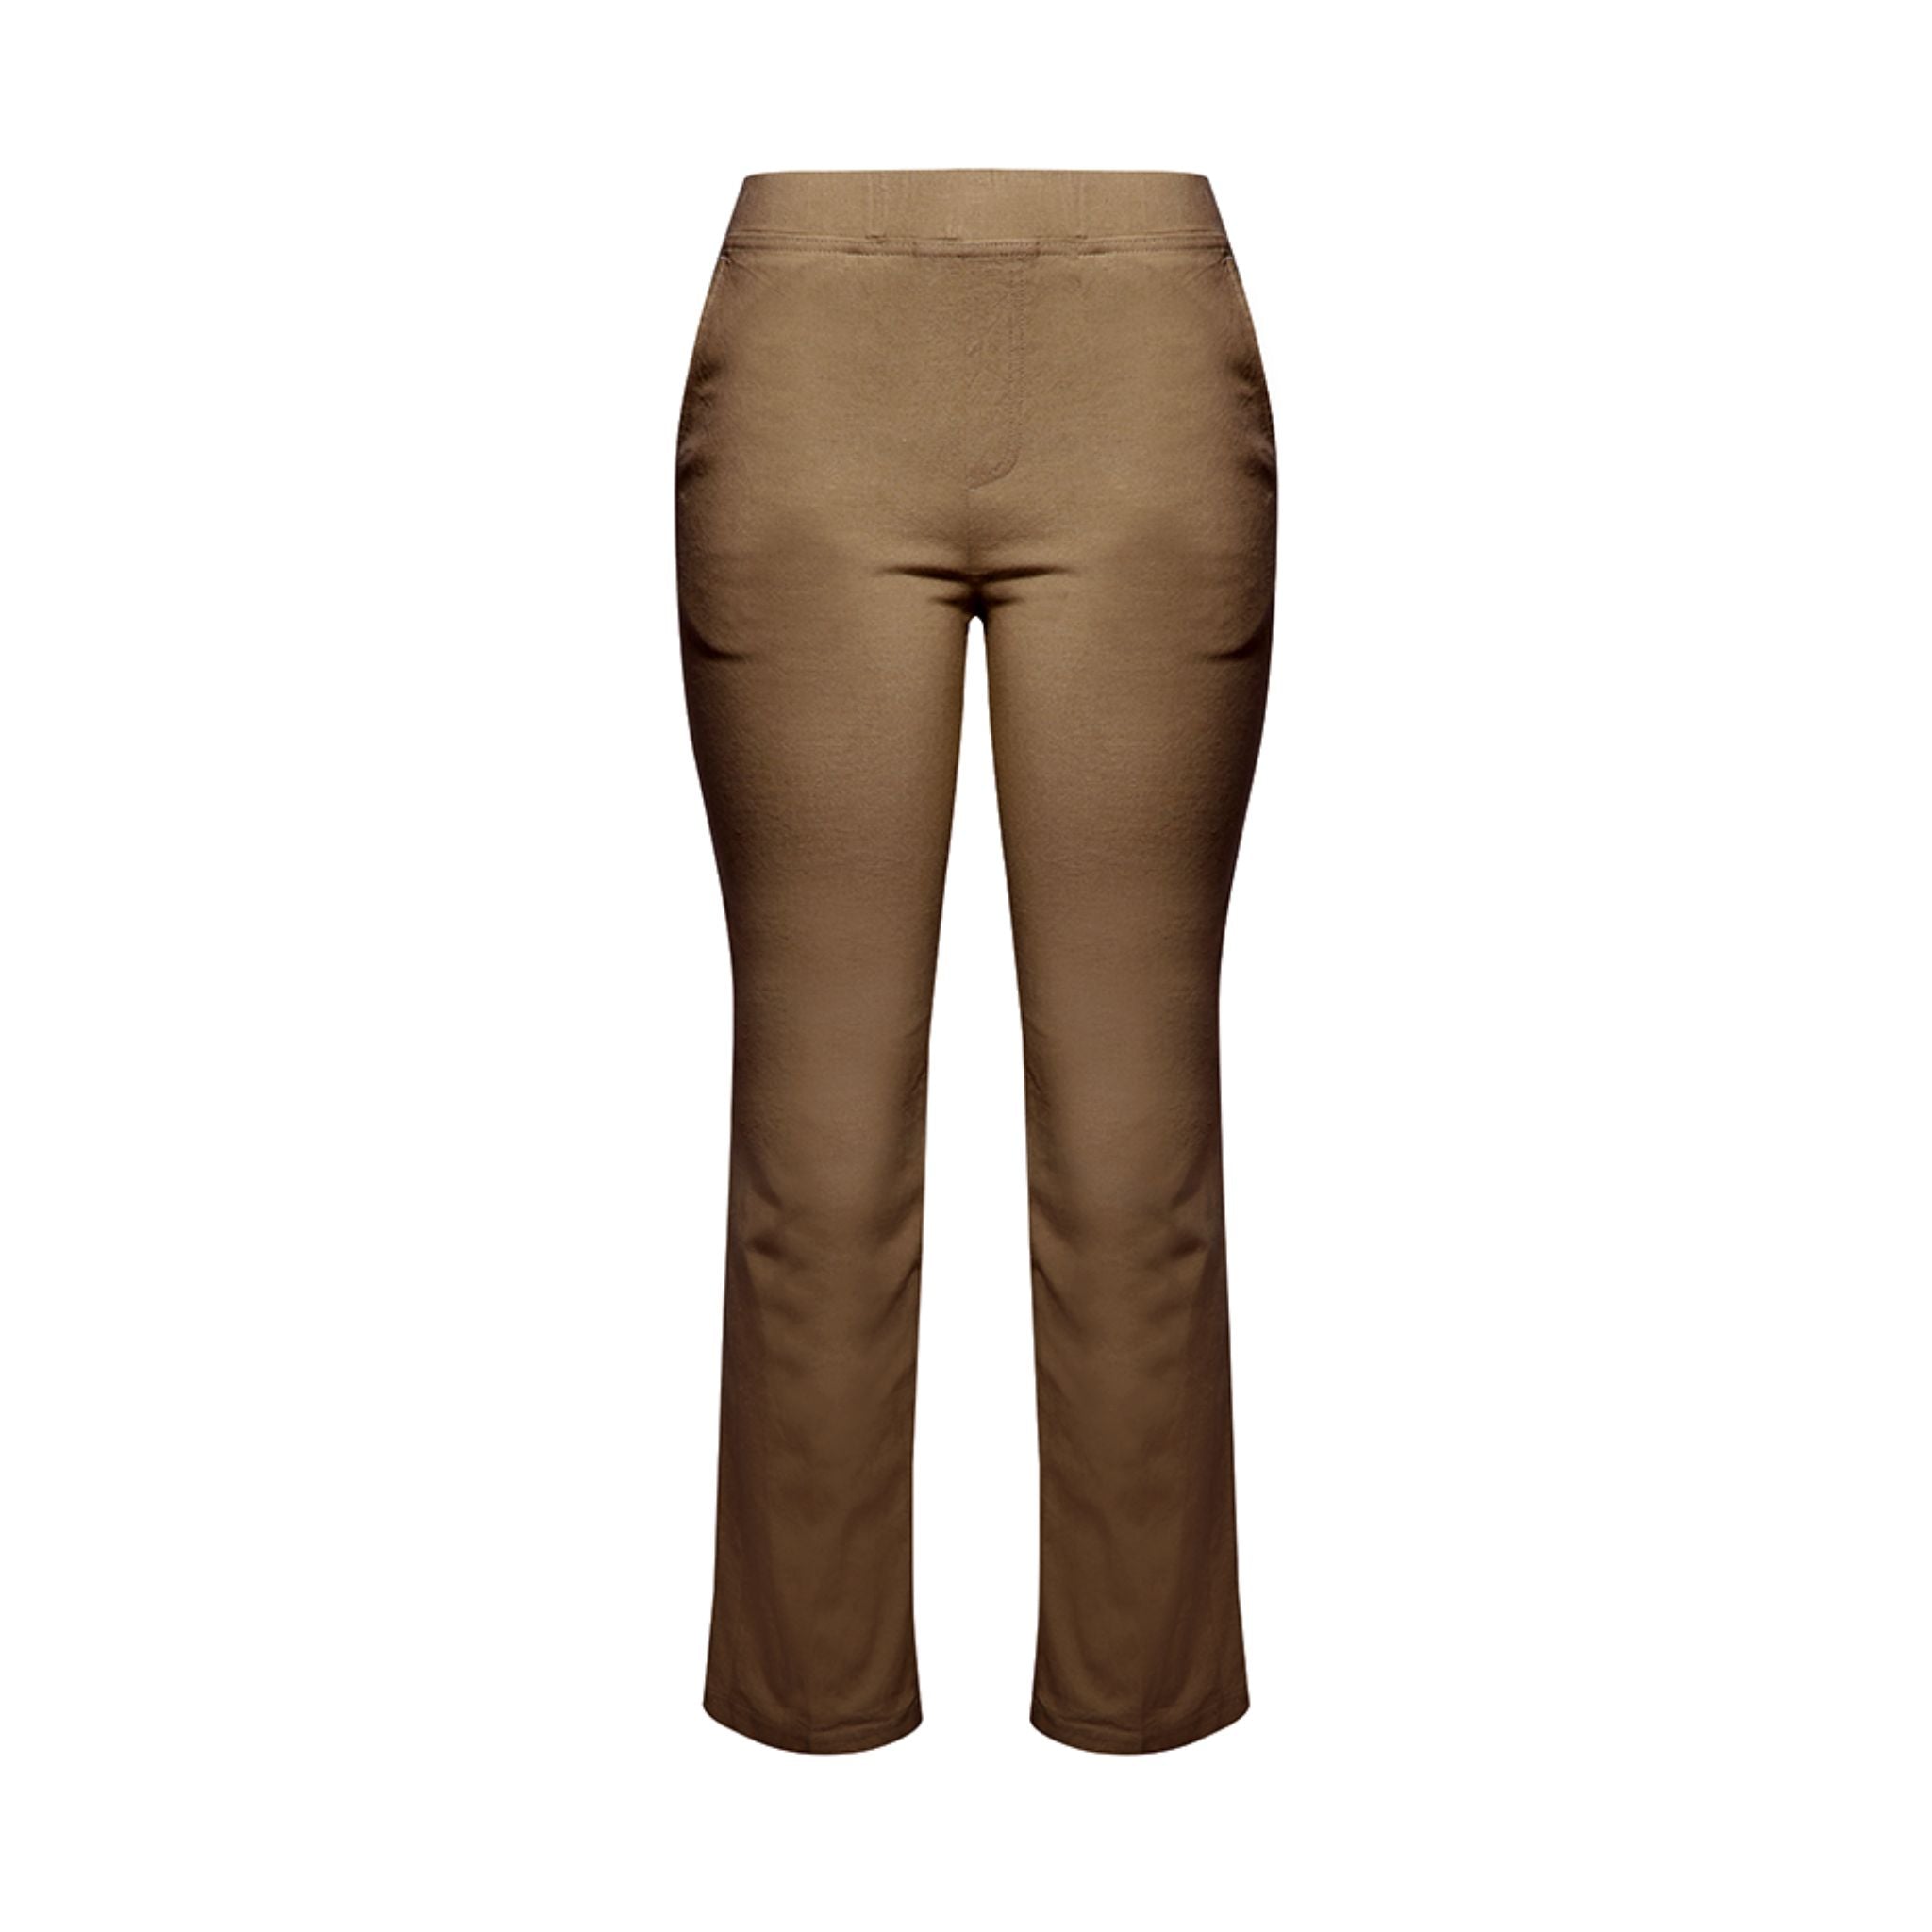 ENRO Long Pants - Brown